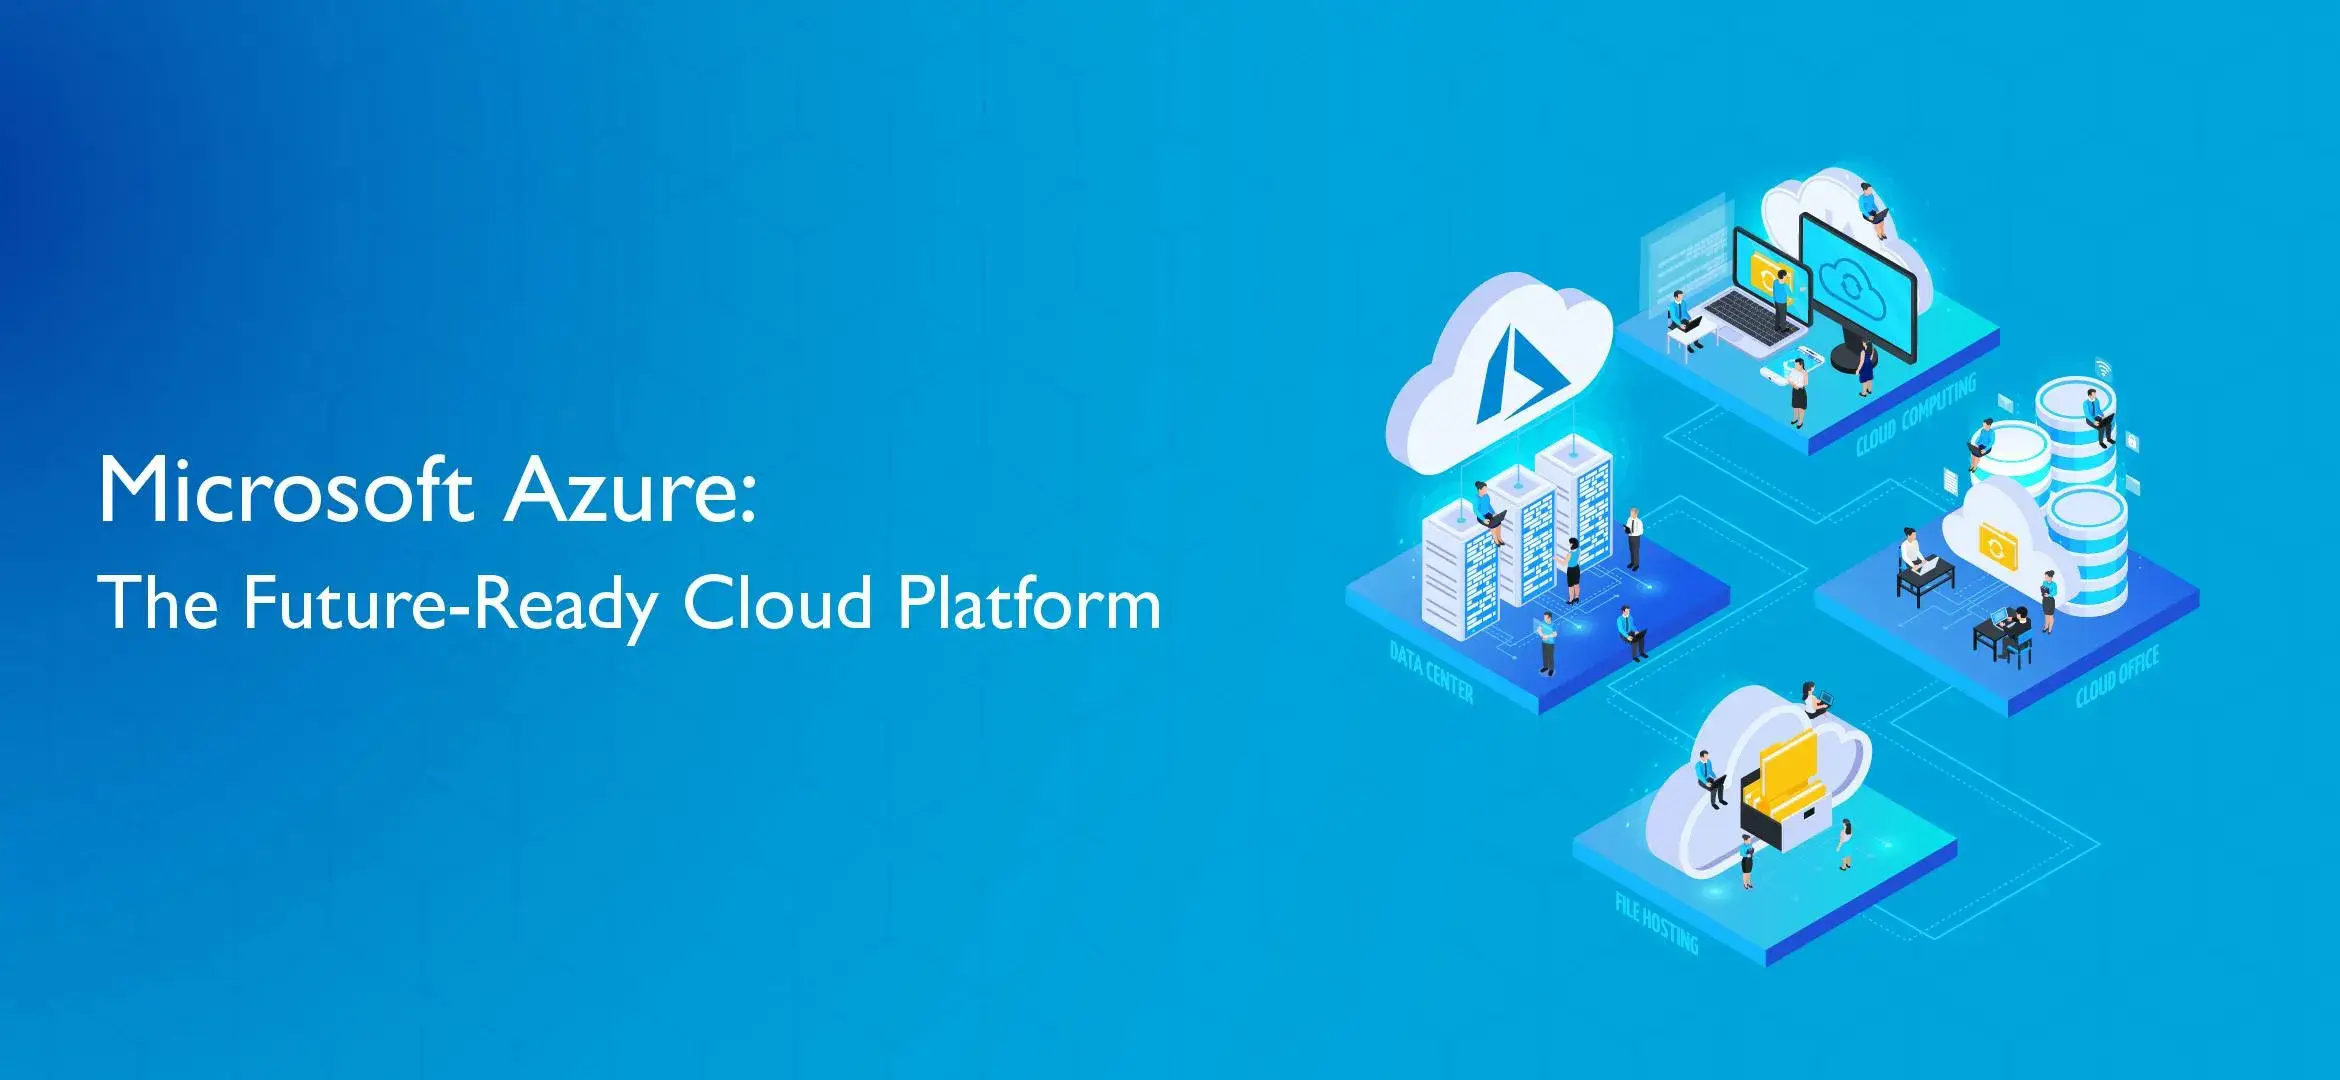 Microsoft Azure: The Future-Ready Cloud Platform